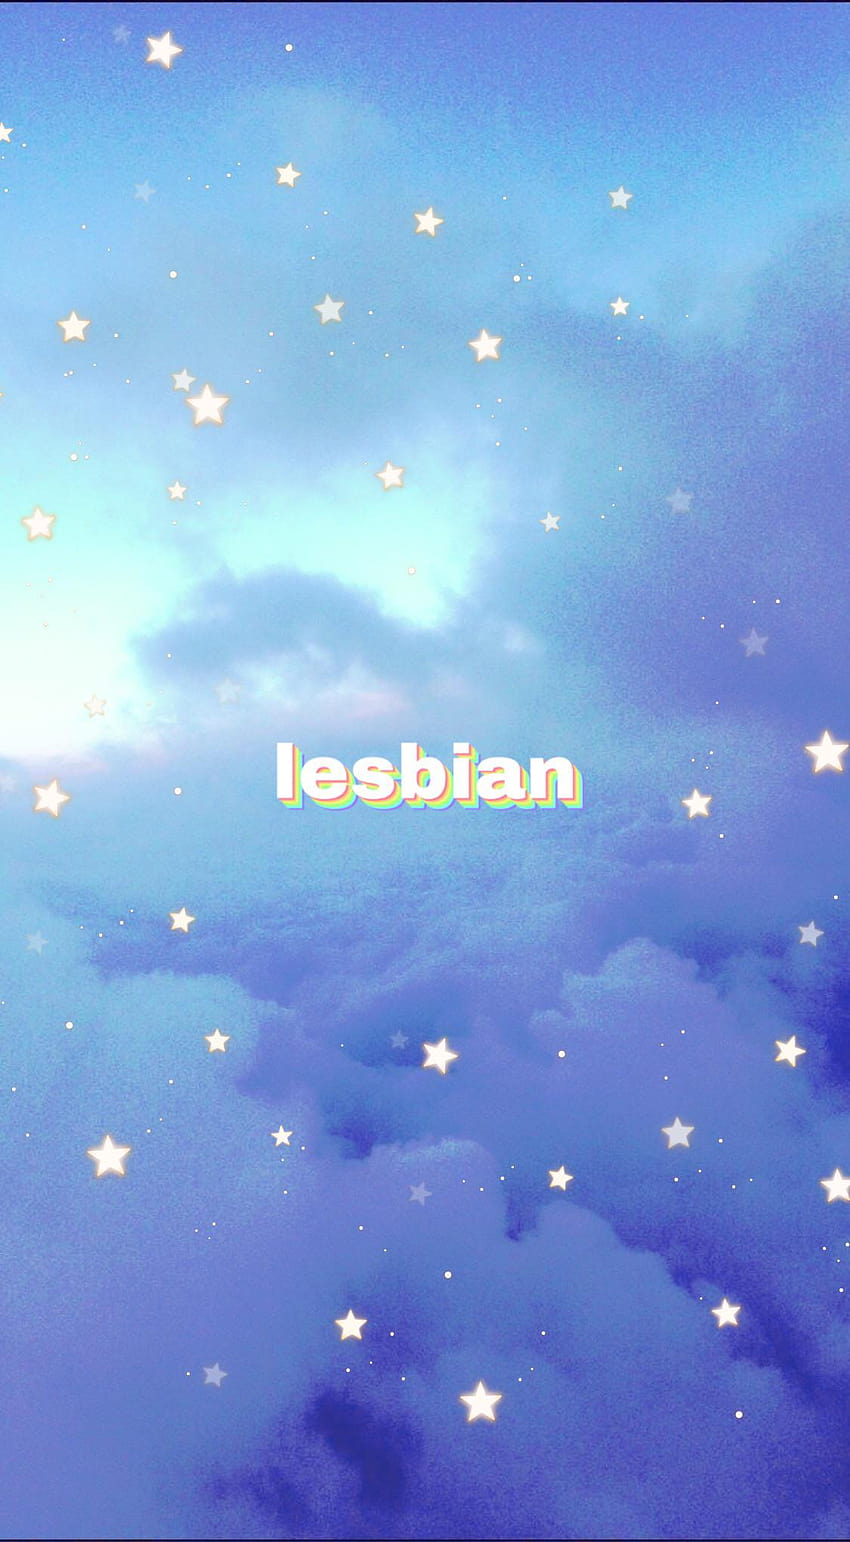 I made lesbian for you guys! I hope you like them, lesbo HD phone wallpaper